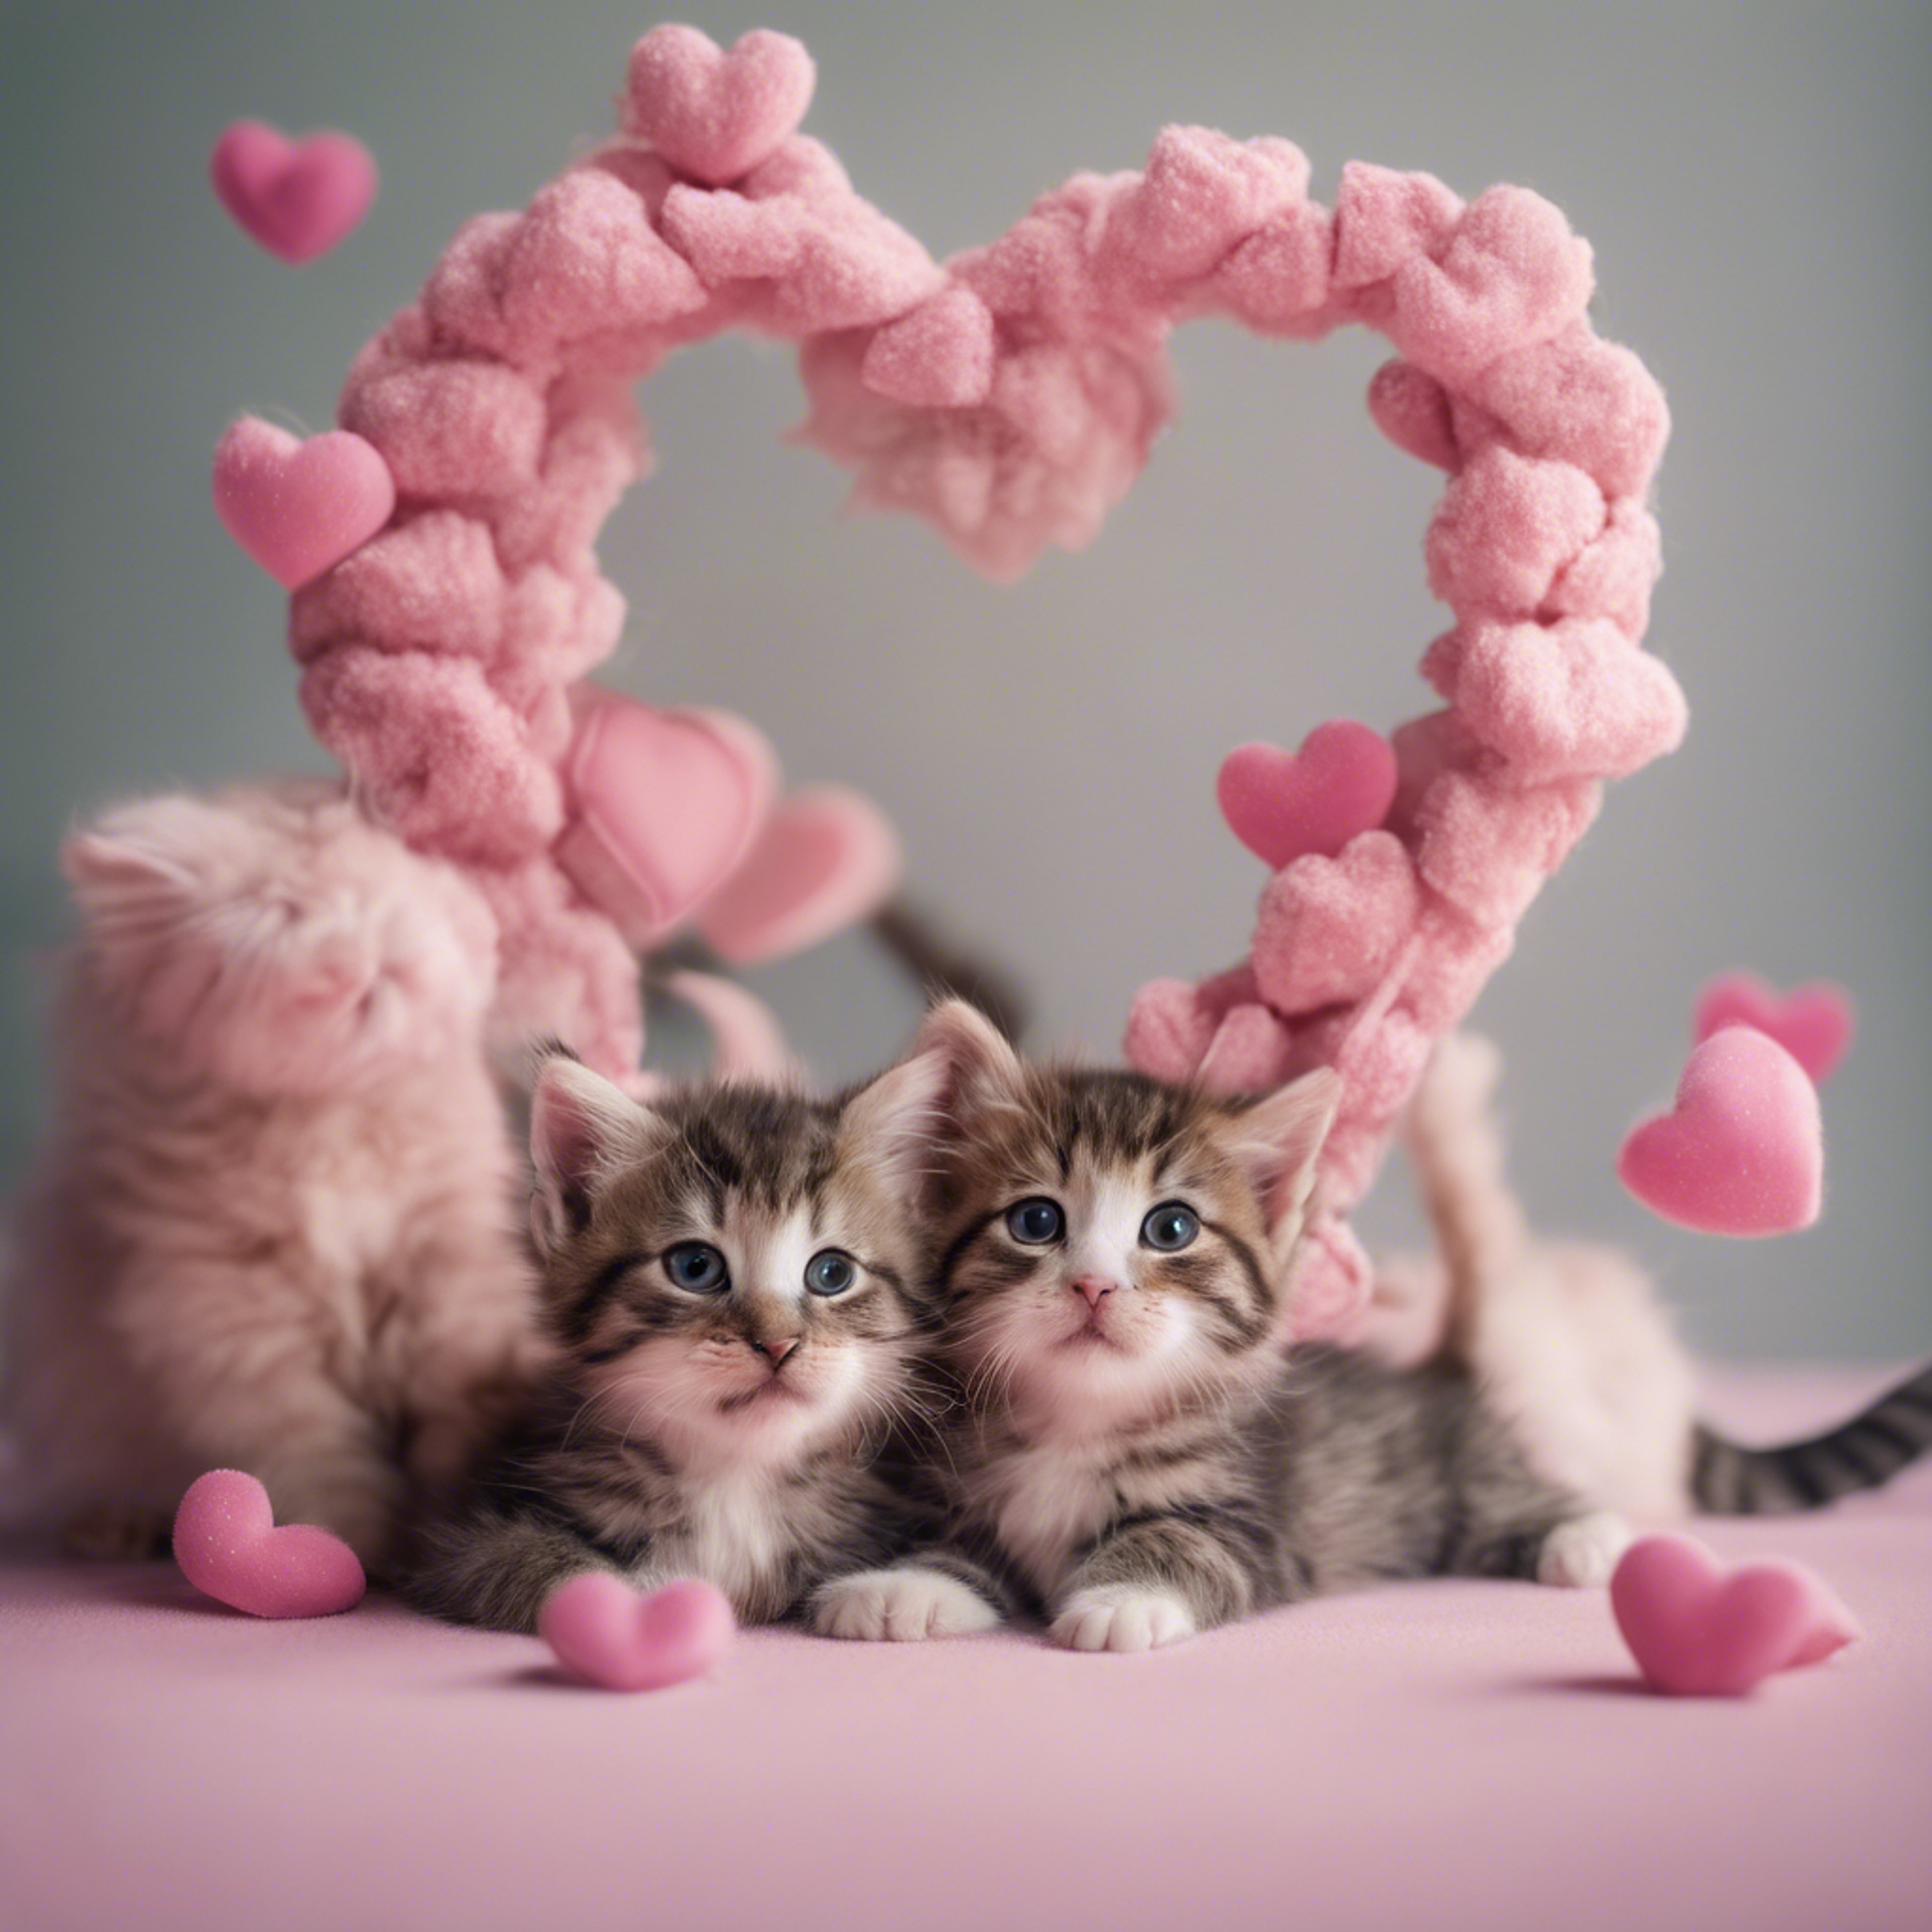 A litter of playful kitties cuddling to form a pink heart shape.壁紙[a2dfdb405dfe4c45ad0a]